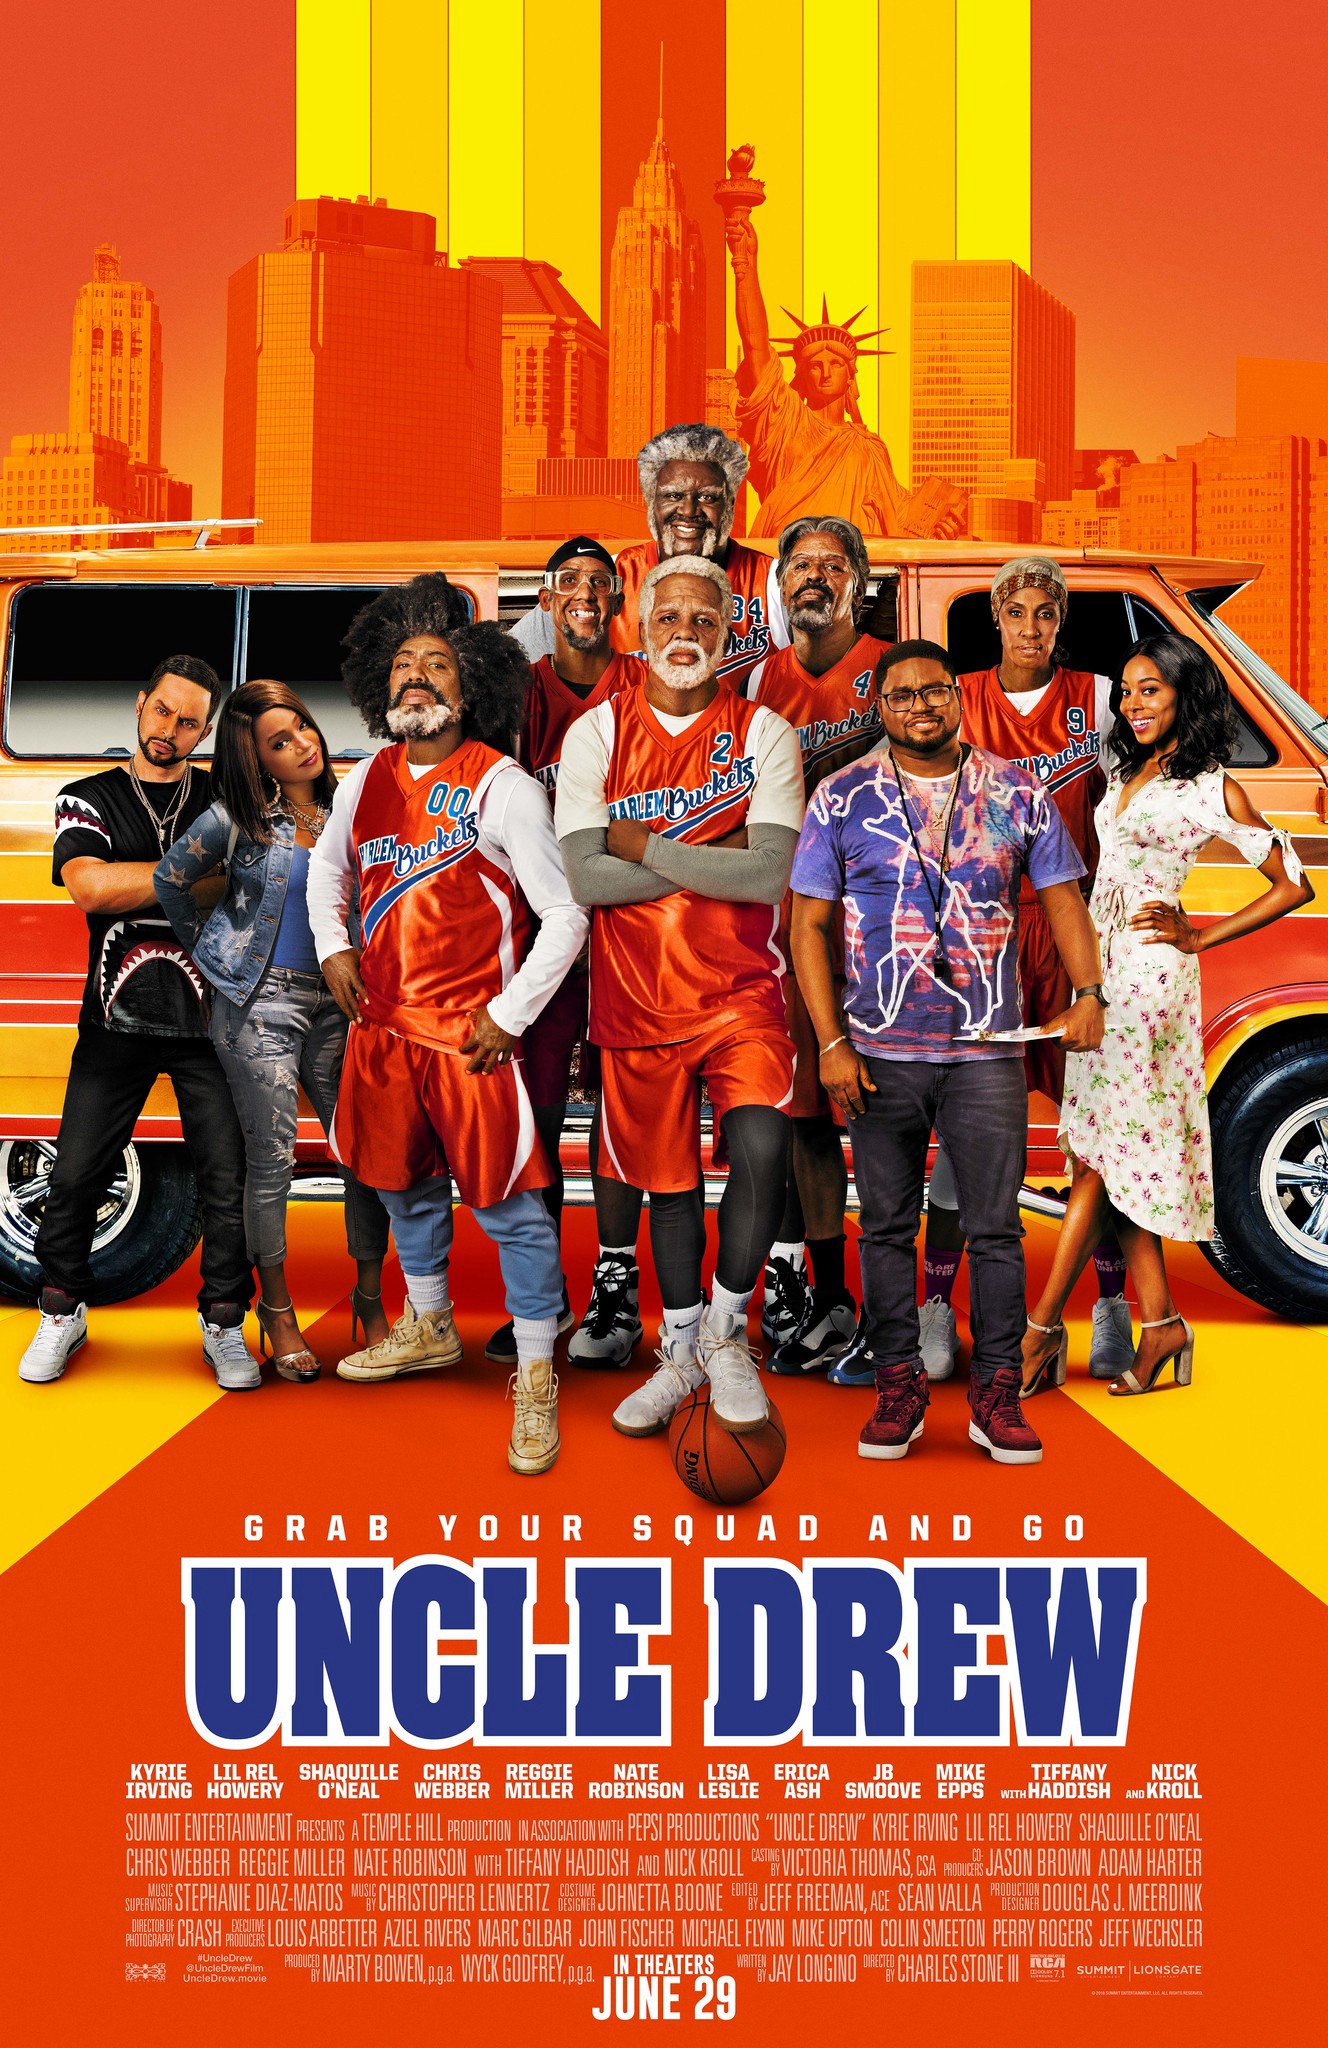 Uncle Drew 2018